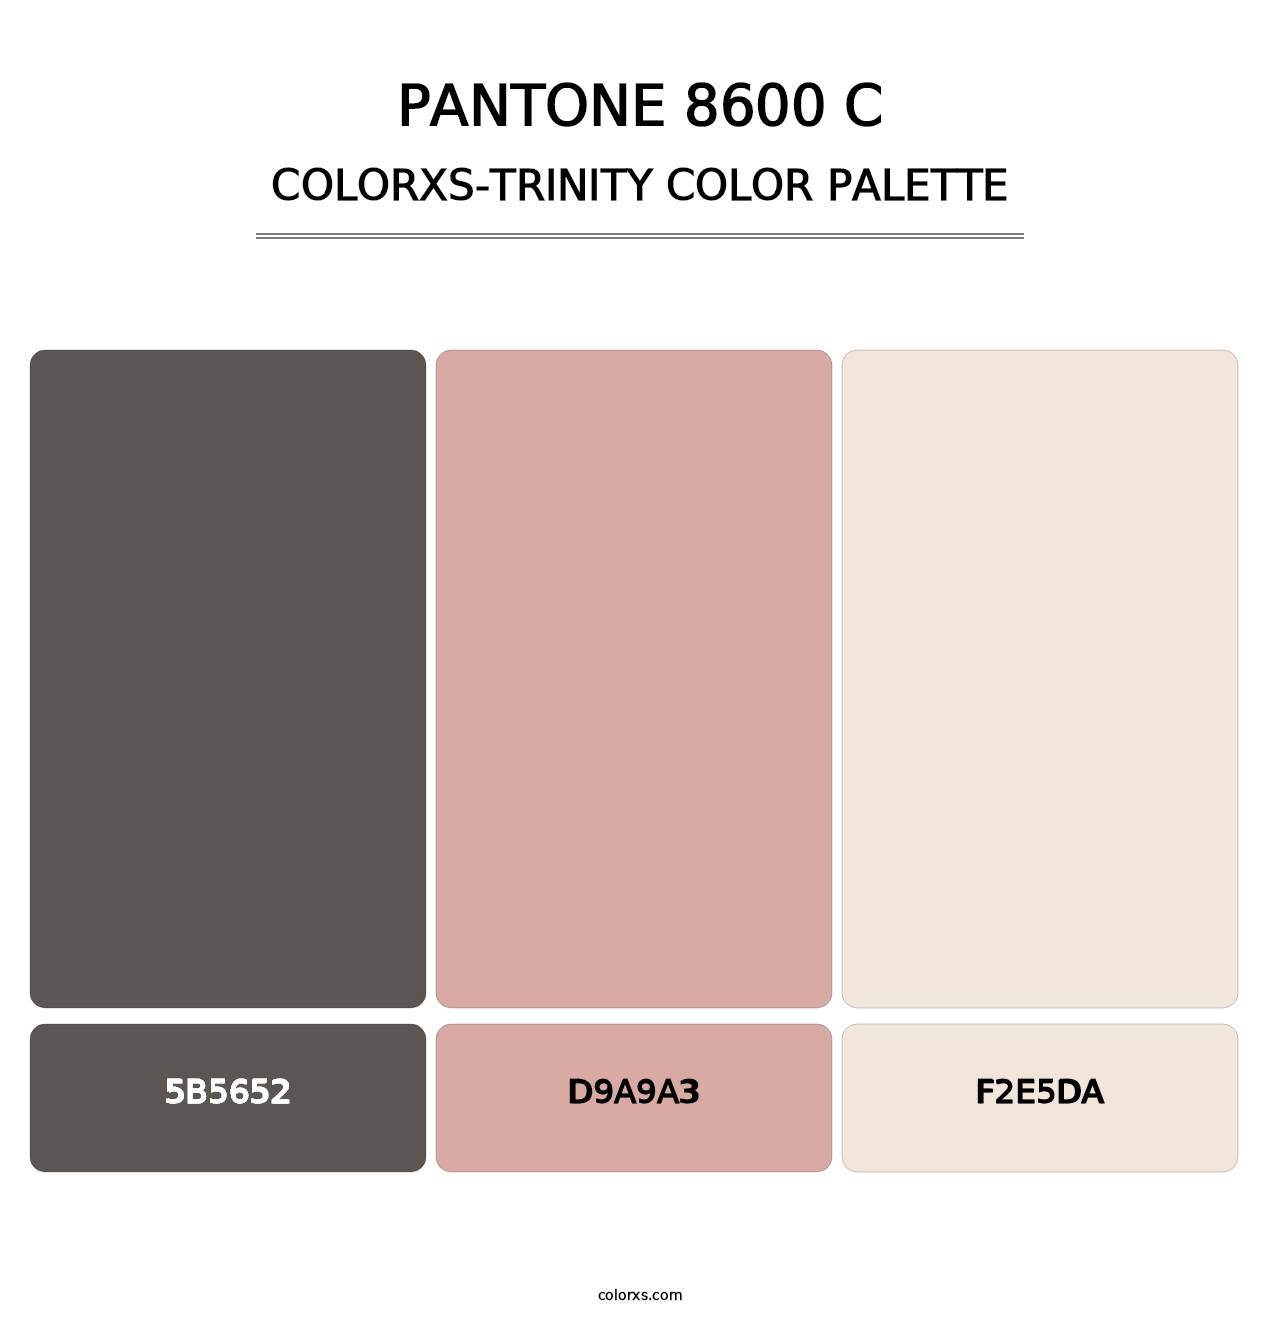 PANTONE 8600 C - Colorxs Trinity Palette